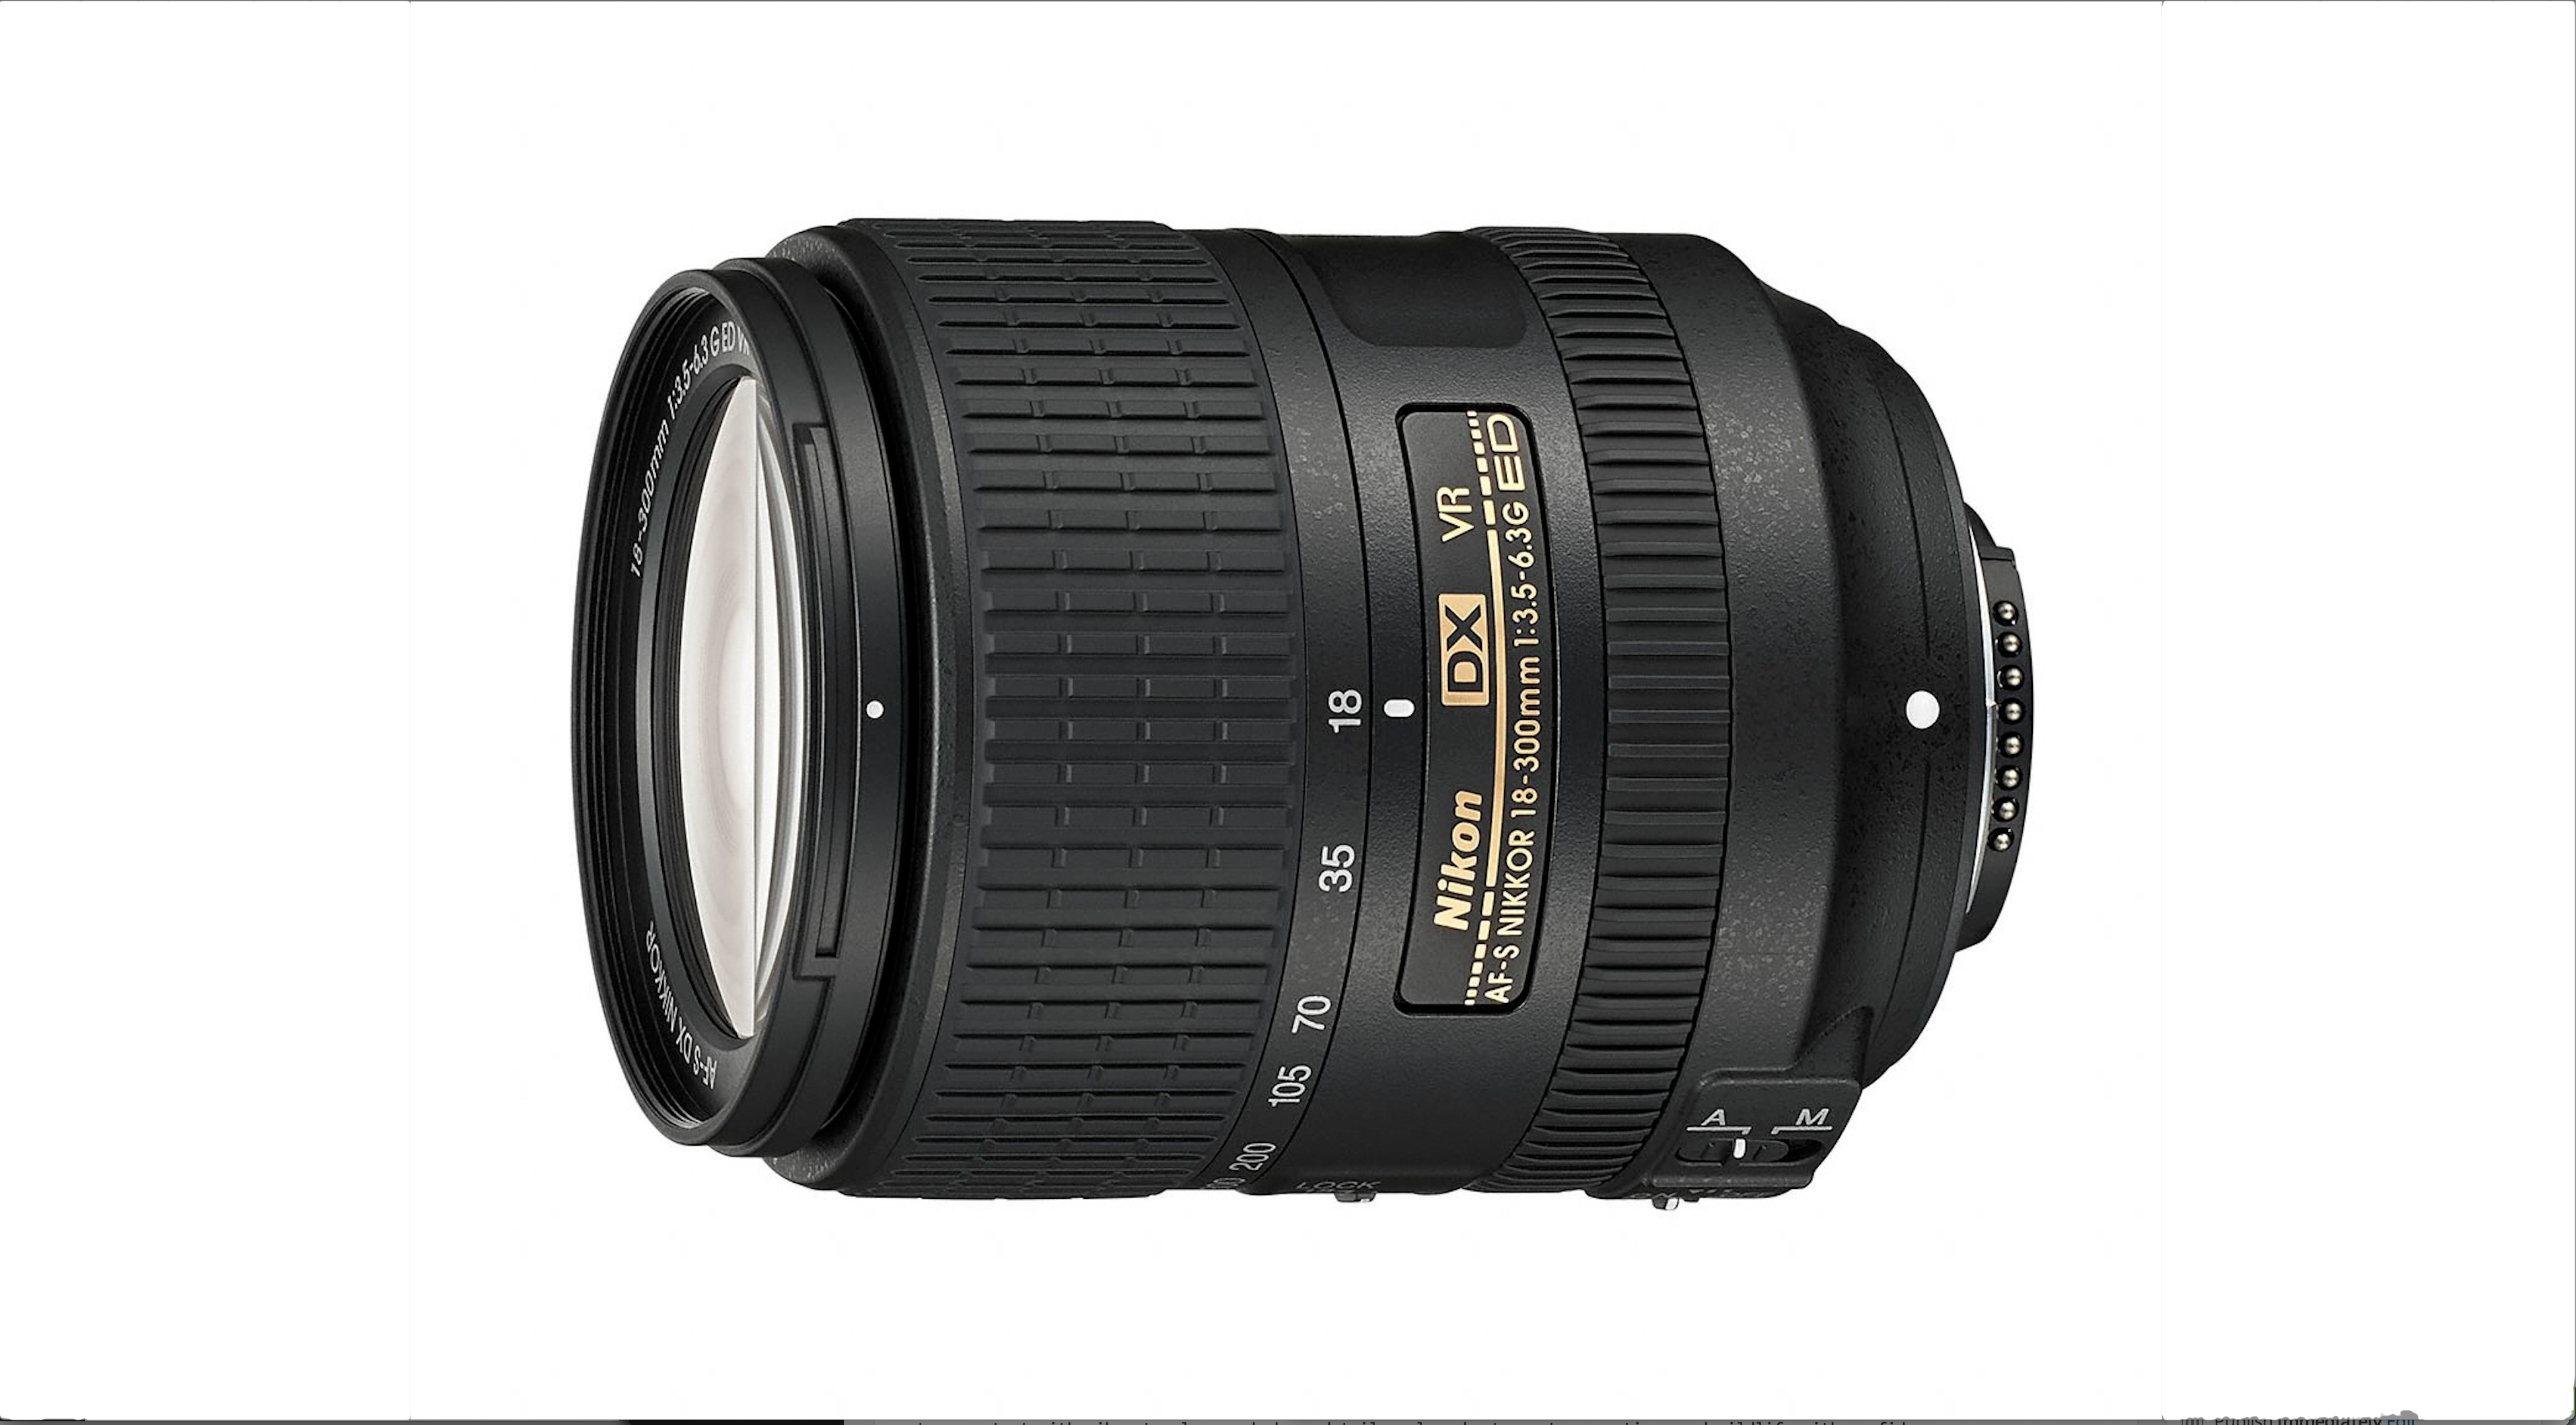 Nikon Announces New NIKKOR 18300mm AFS Telephoto Zoom Lens